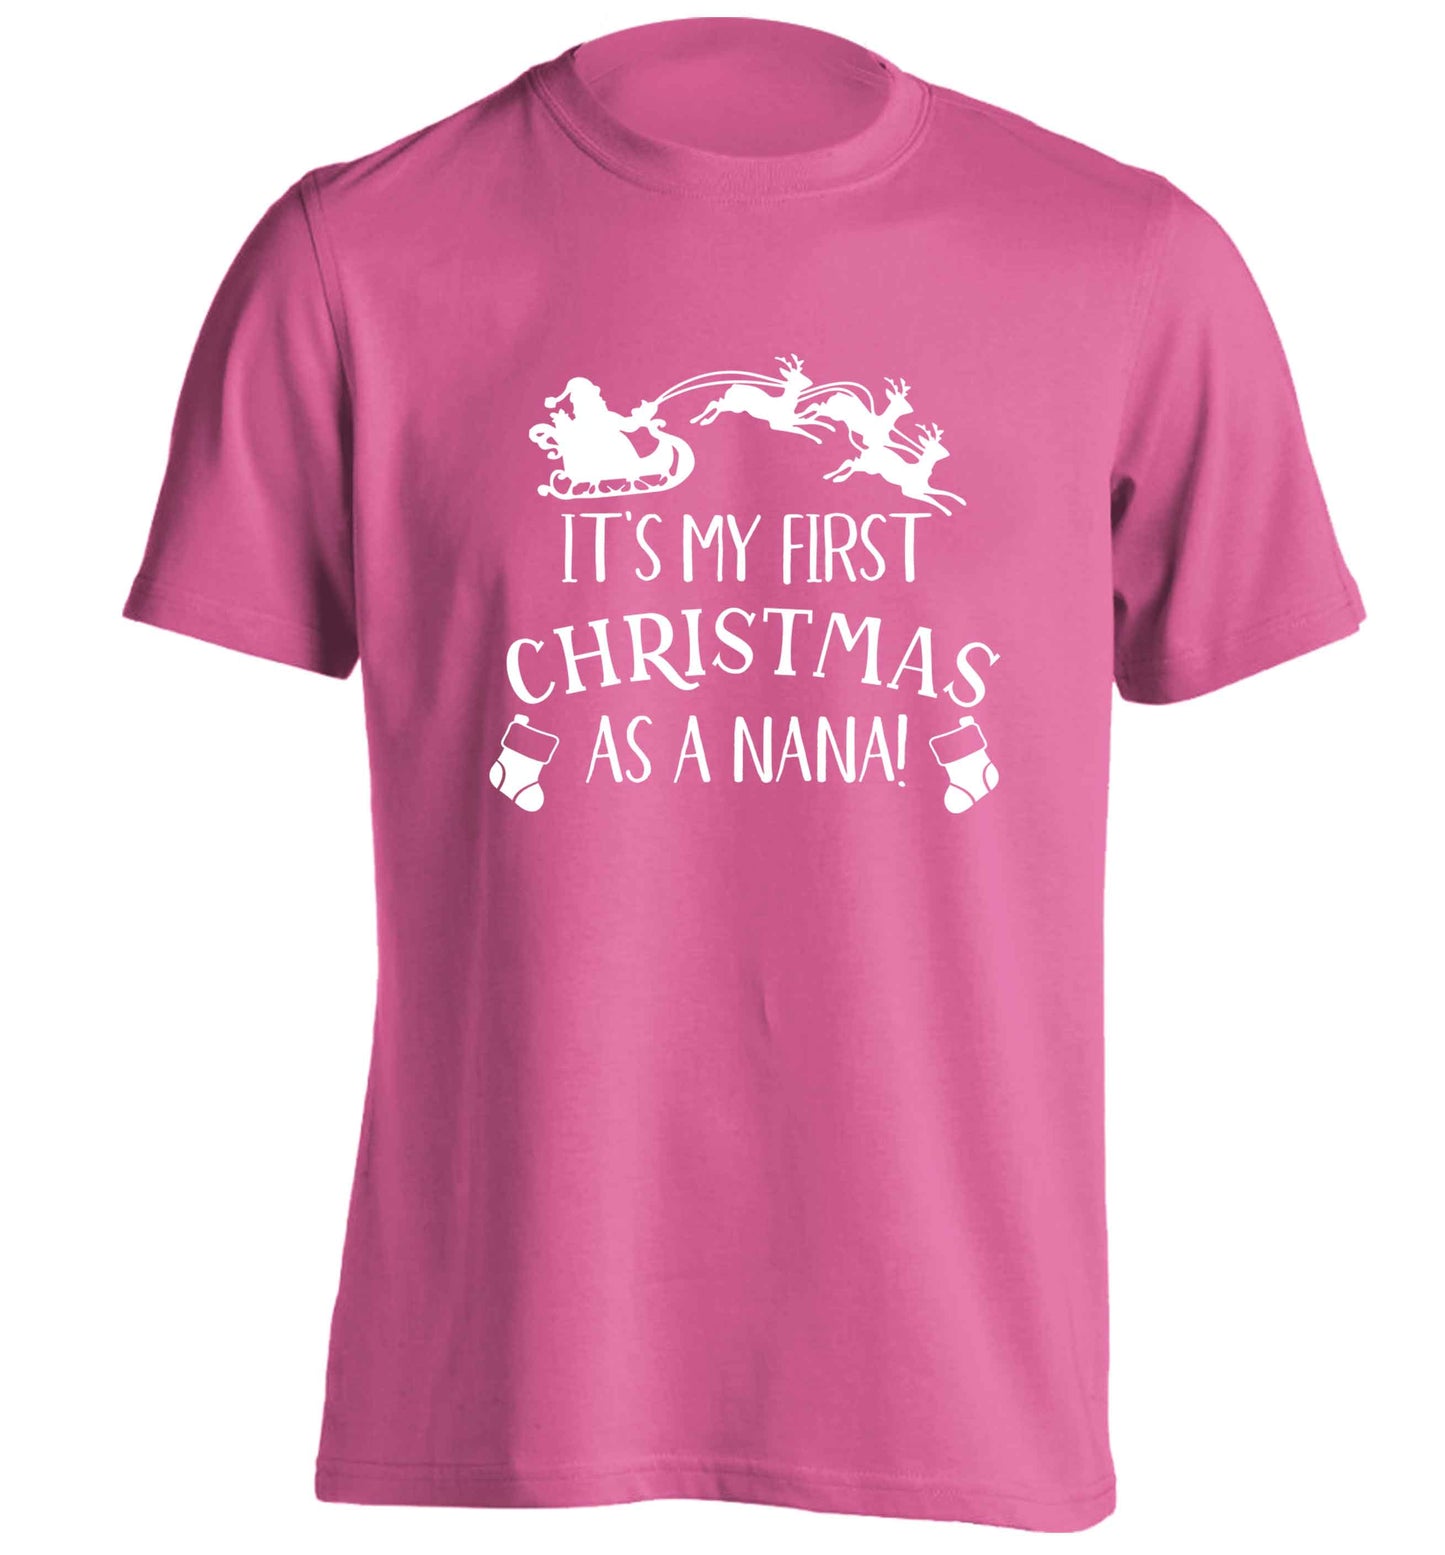 It's my first Christmas as a nana adults unisex pink Tshirt 2XL